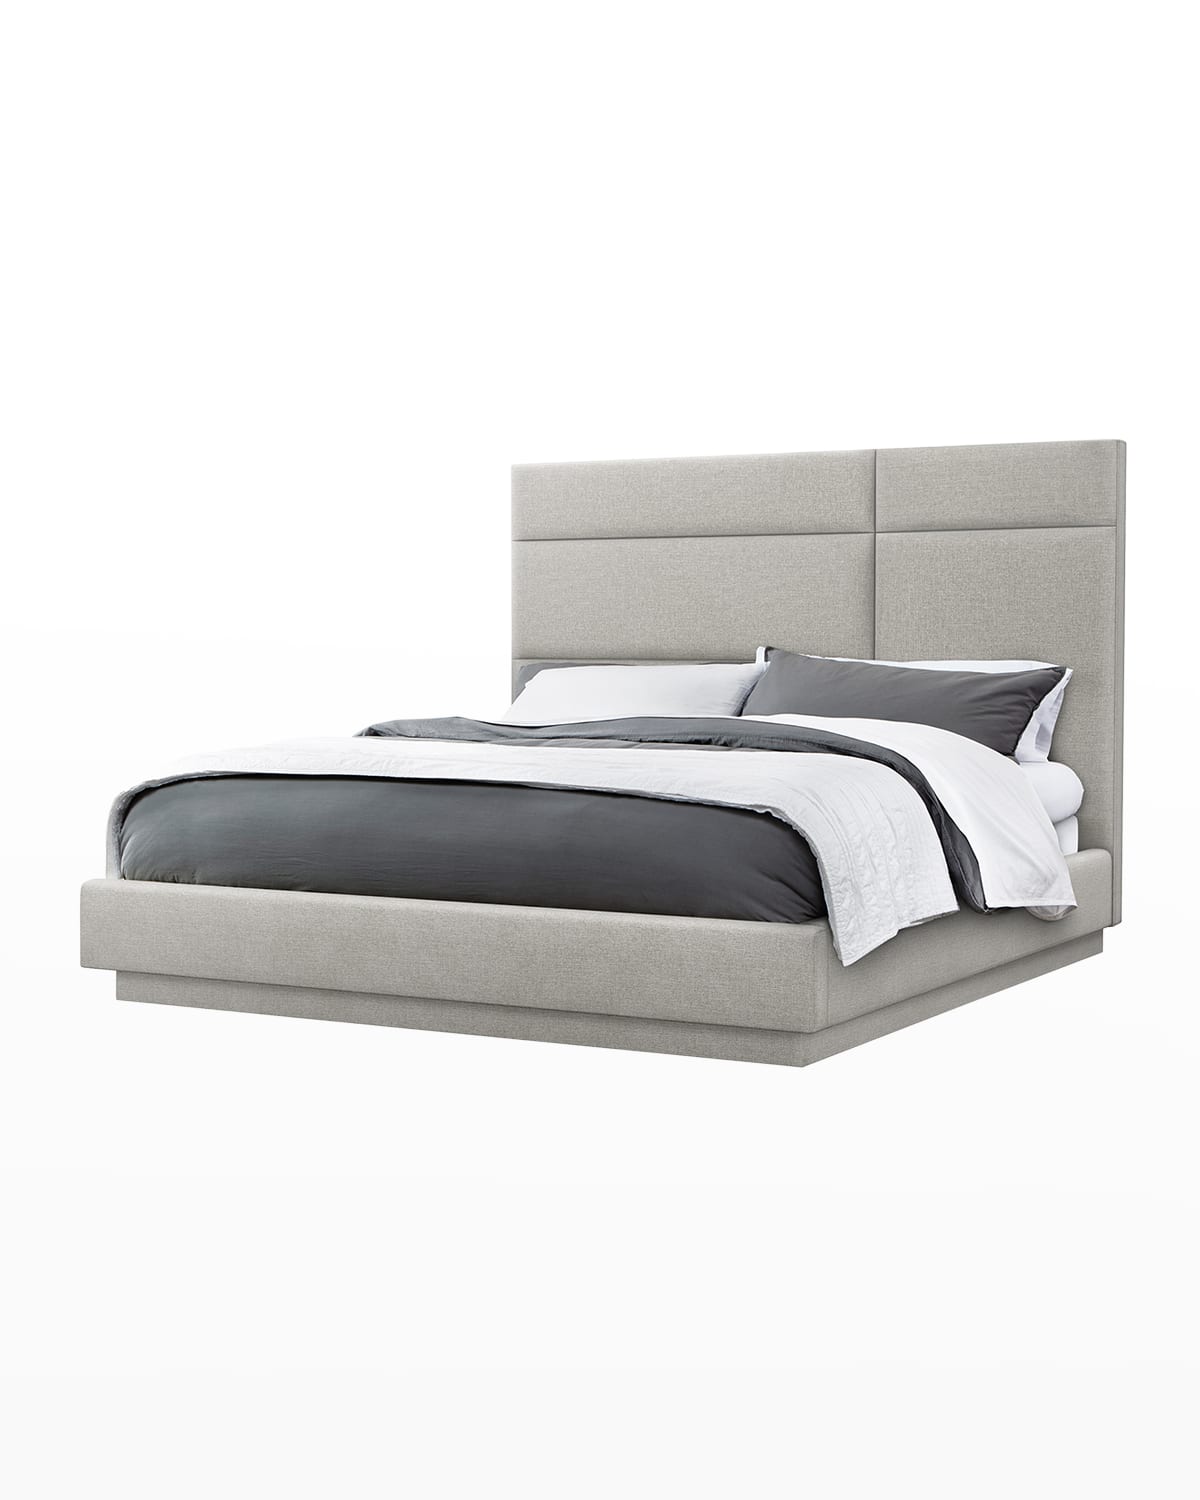 Interlude Home Quadrant Queen Bed